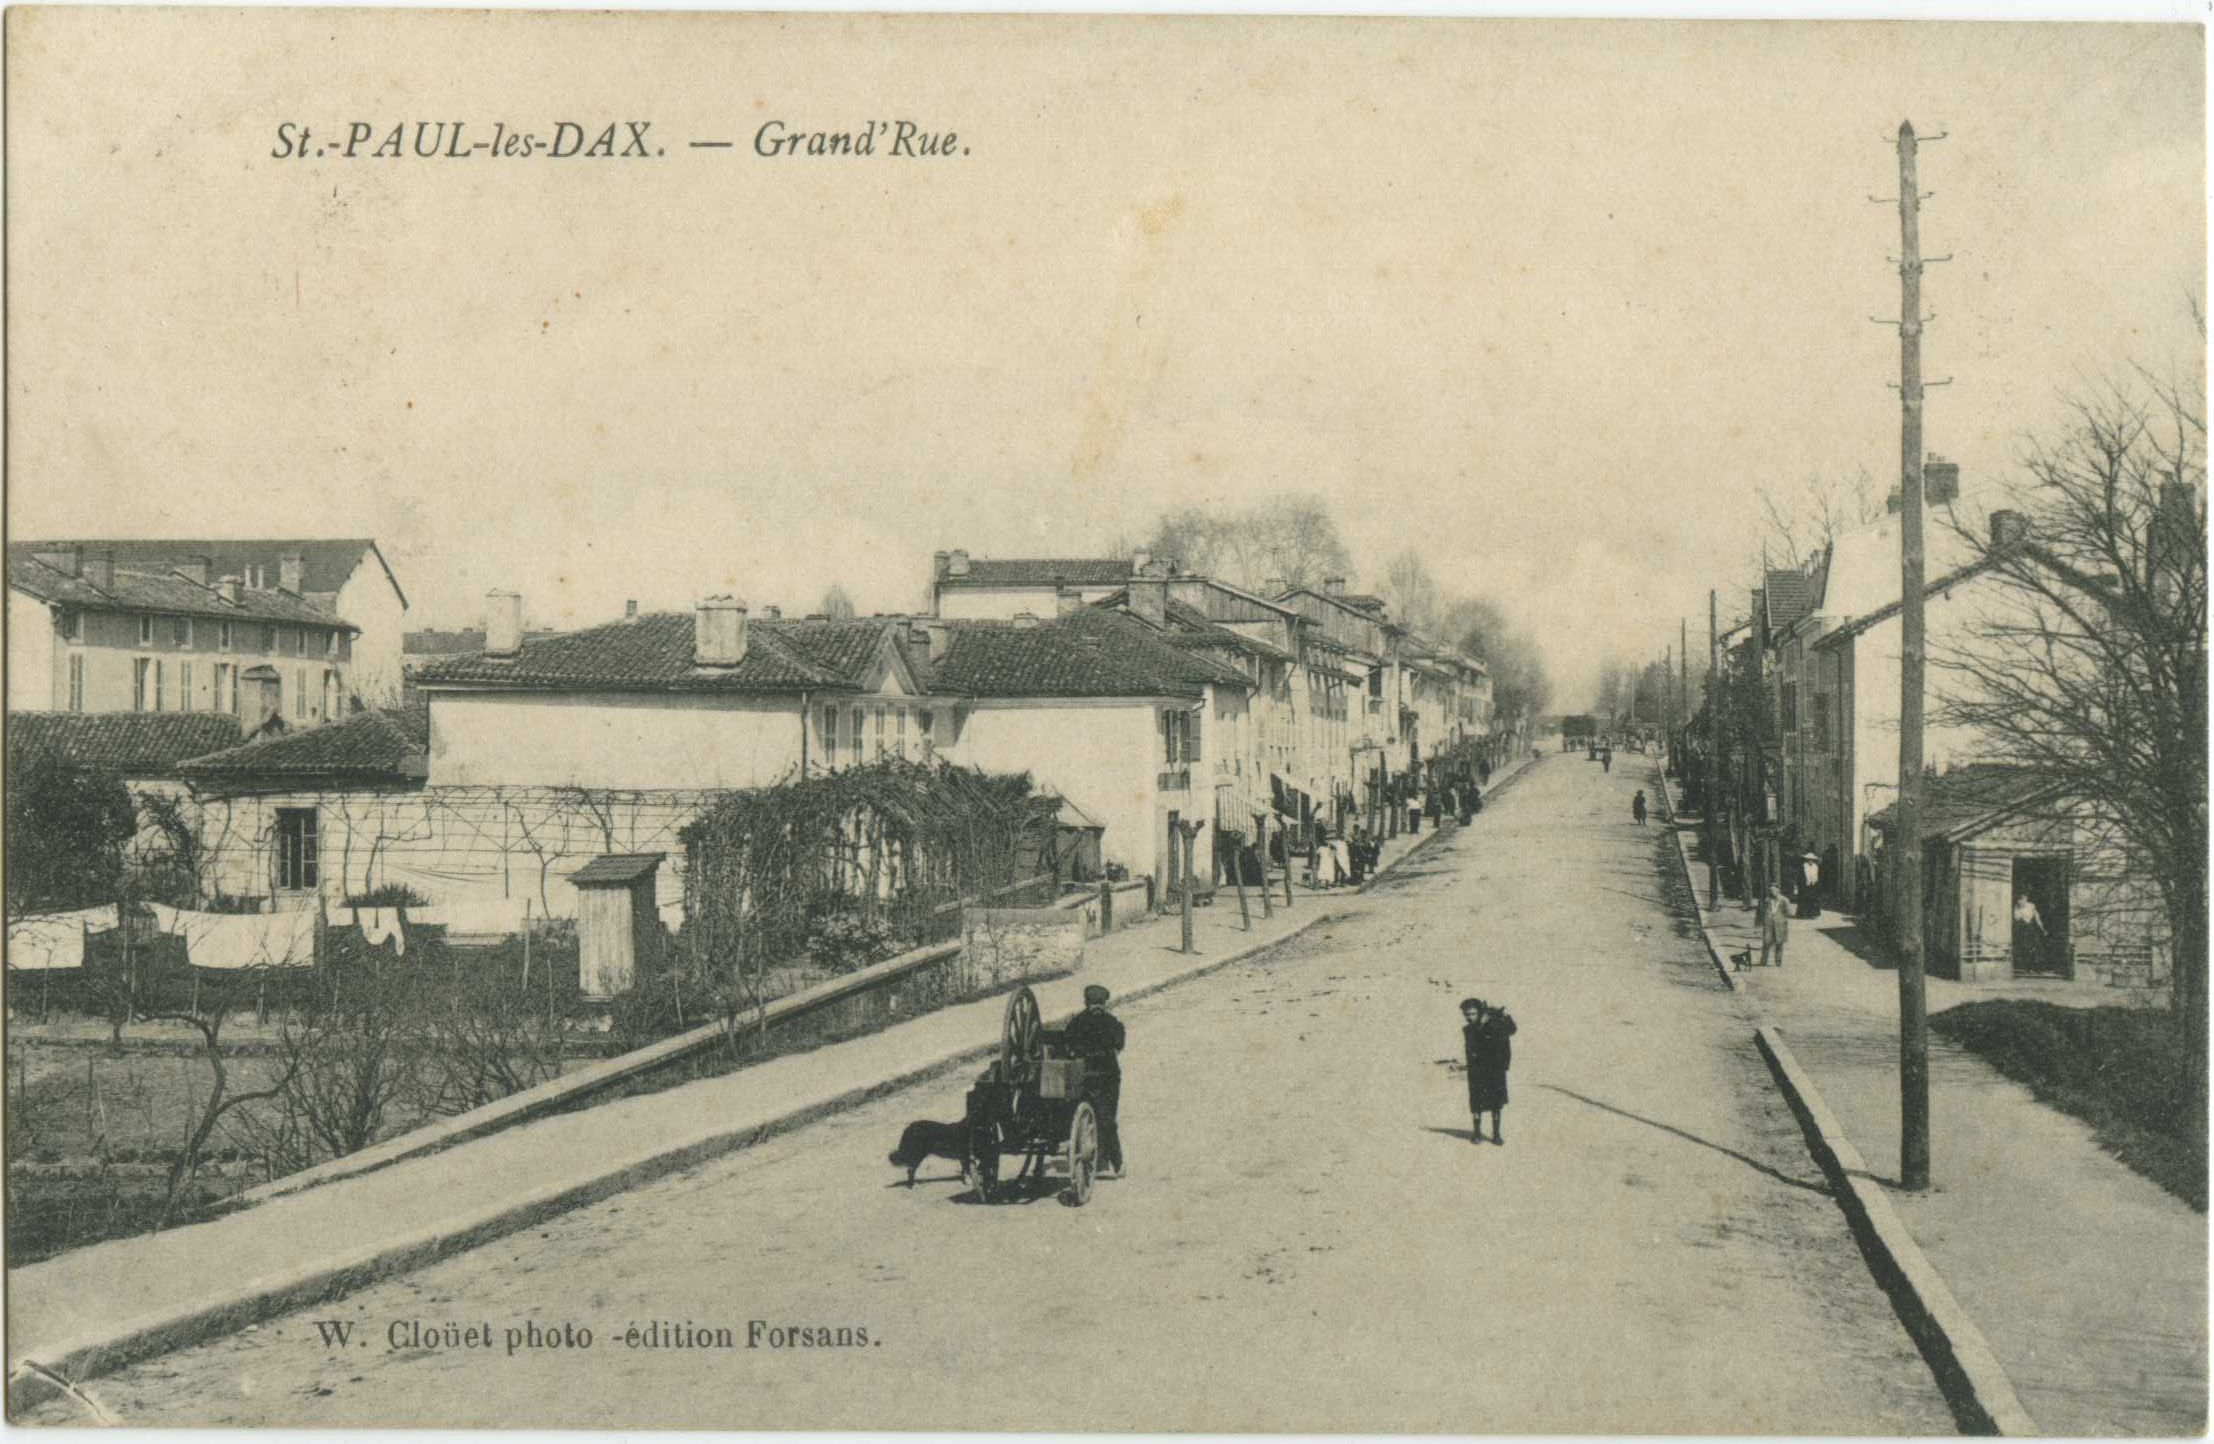 Saint-Paul-lès-Dax - Grand'Rue